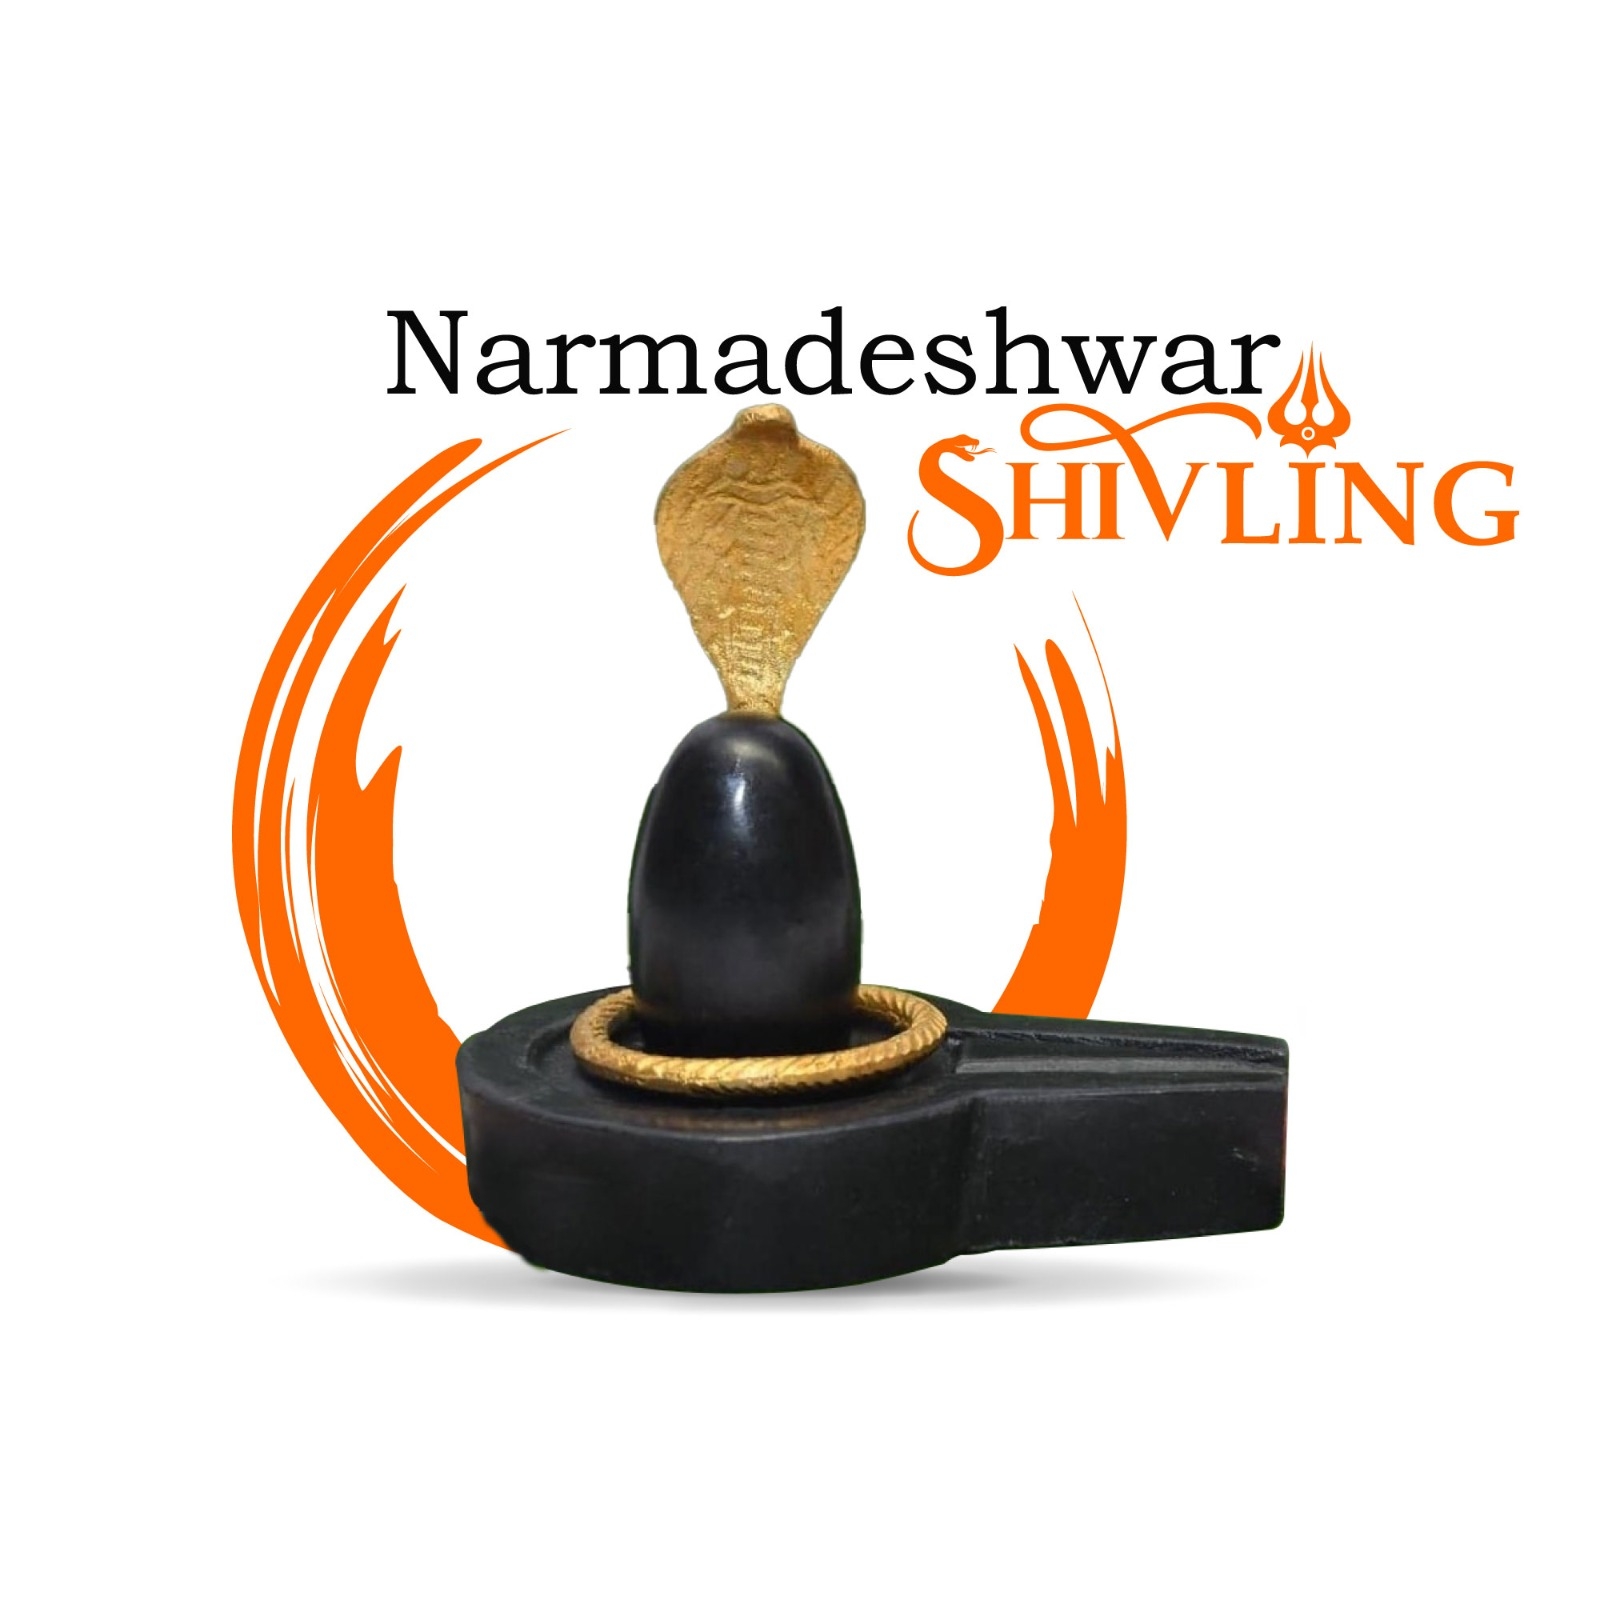 Narmadeshwar Shivling,OtherAnnouncementsAll Indiaother